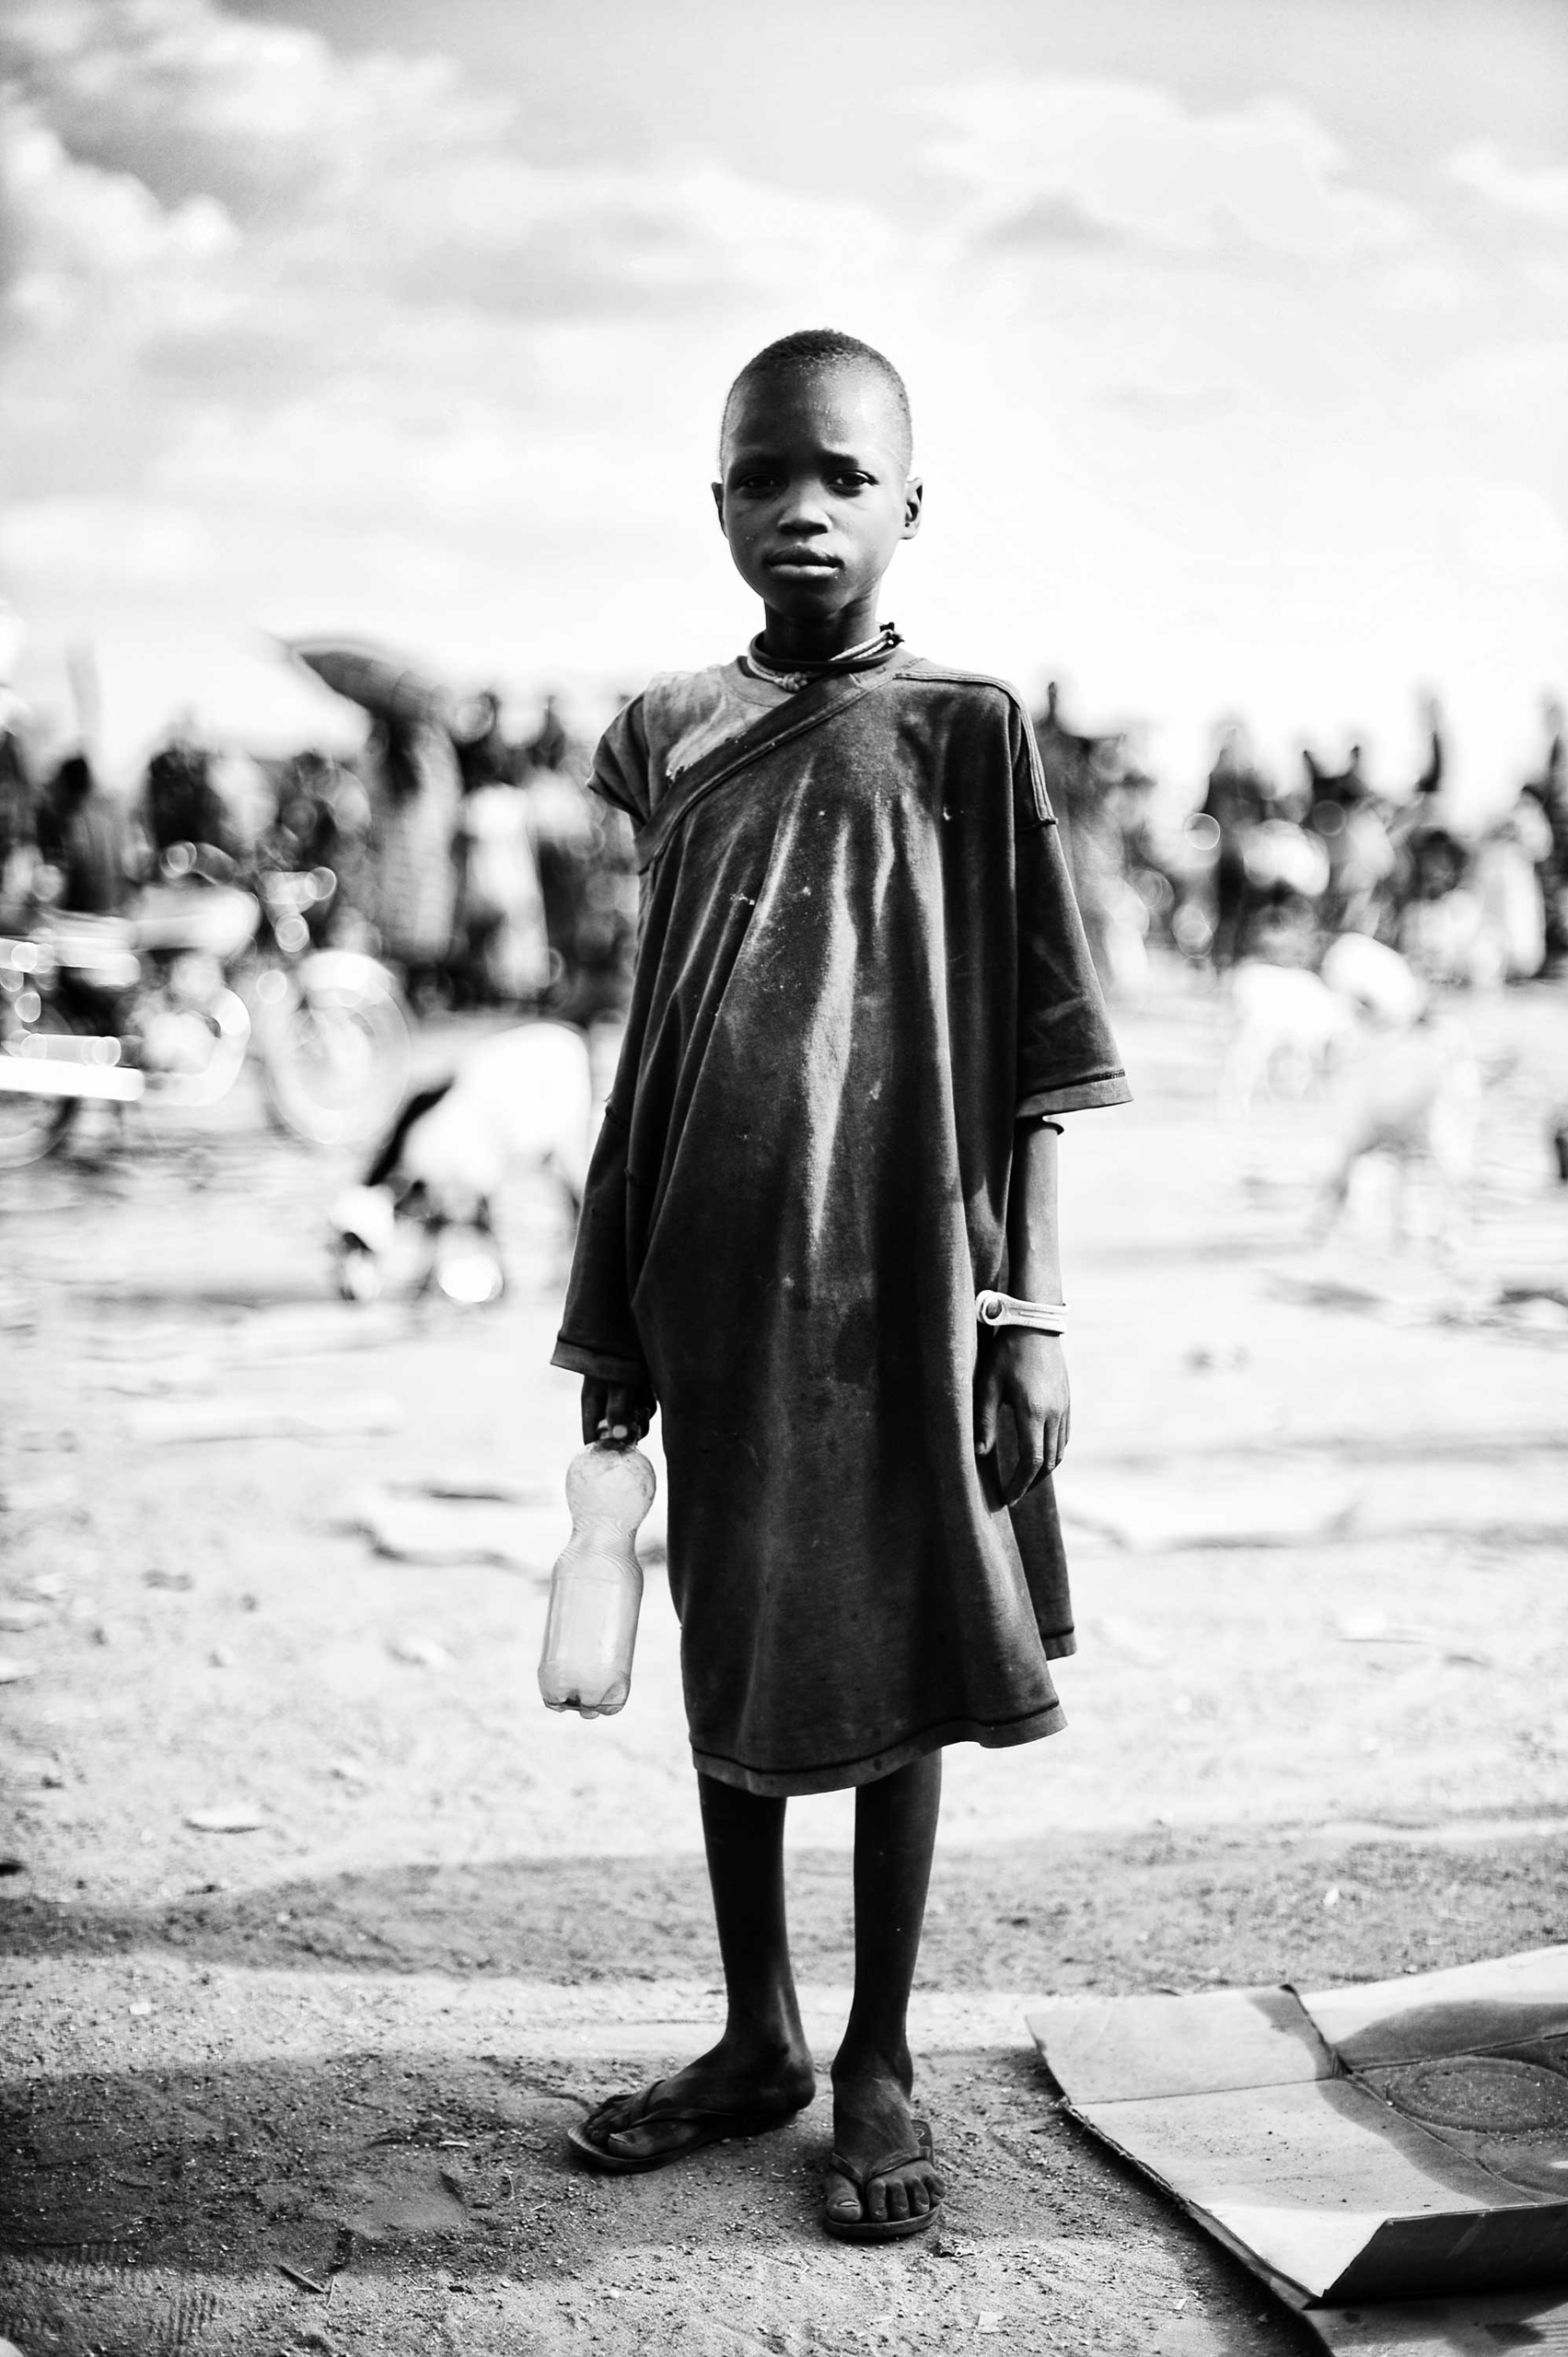 ugo-borga-south-soudan-portraits-2016-black-and-white-01